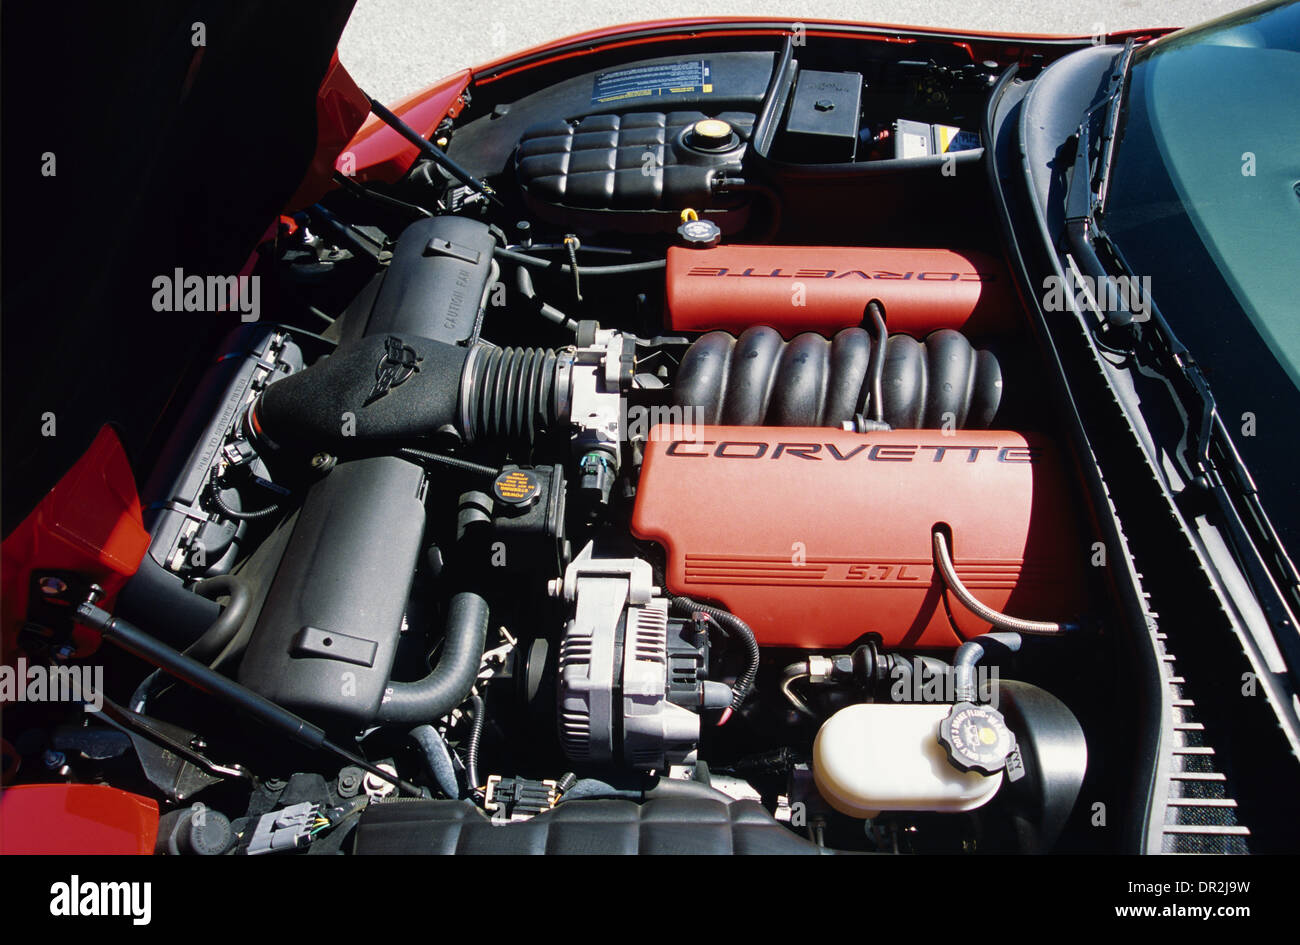 Chevrolet Corvette C5 - Z06 Model 2001 - Red - engine view Stock Photo